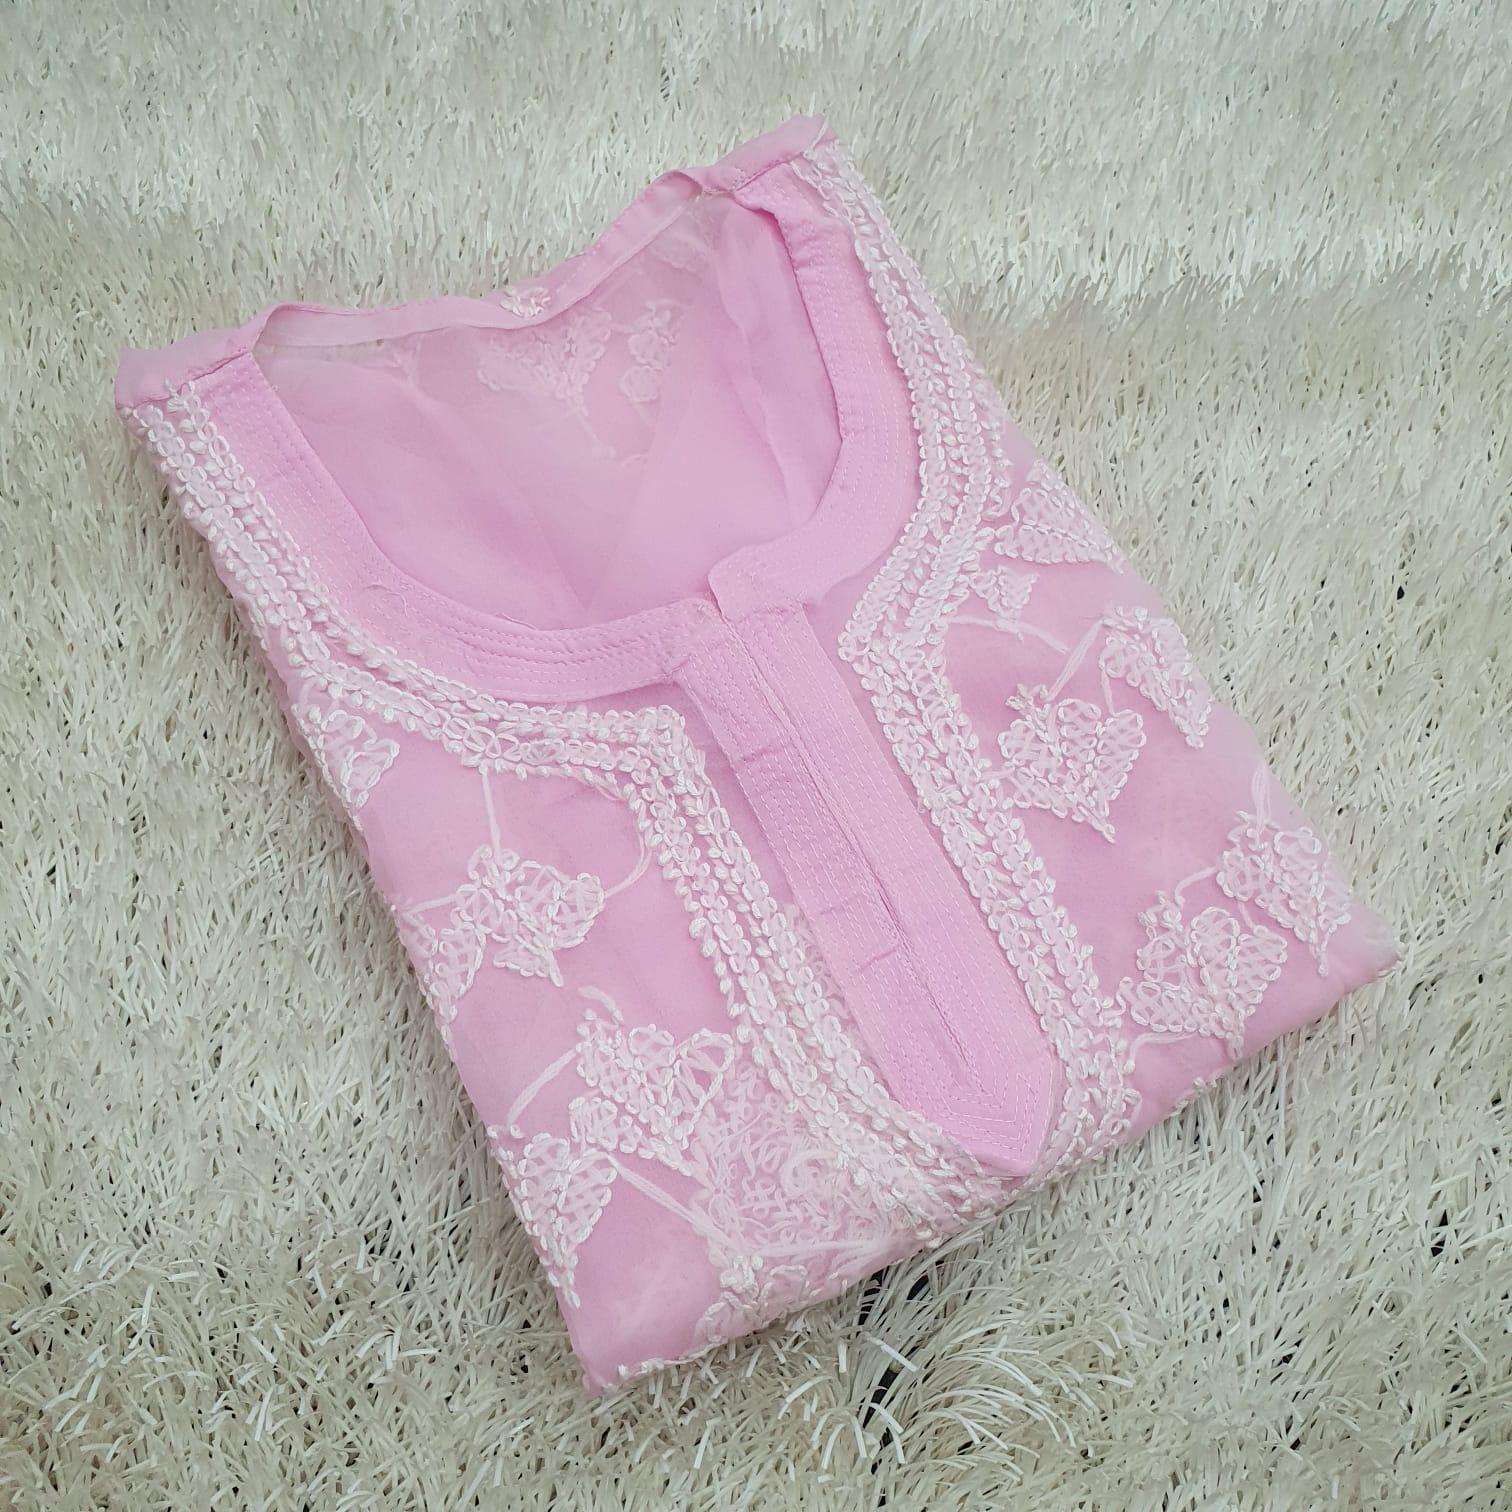 Pink Chikankari Elegance: Long Chiffon Kurti Set - Inayakhan Shop 